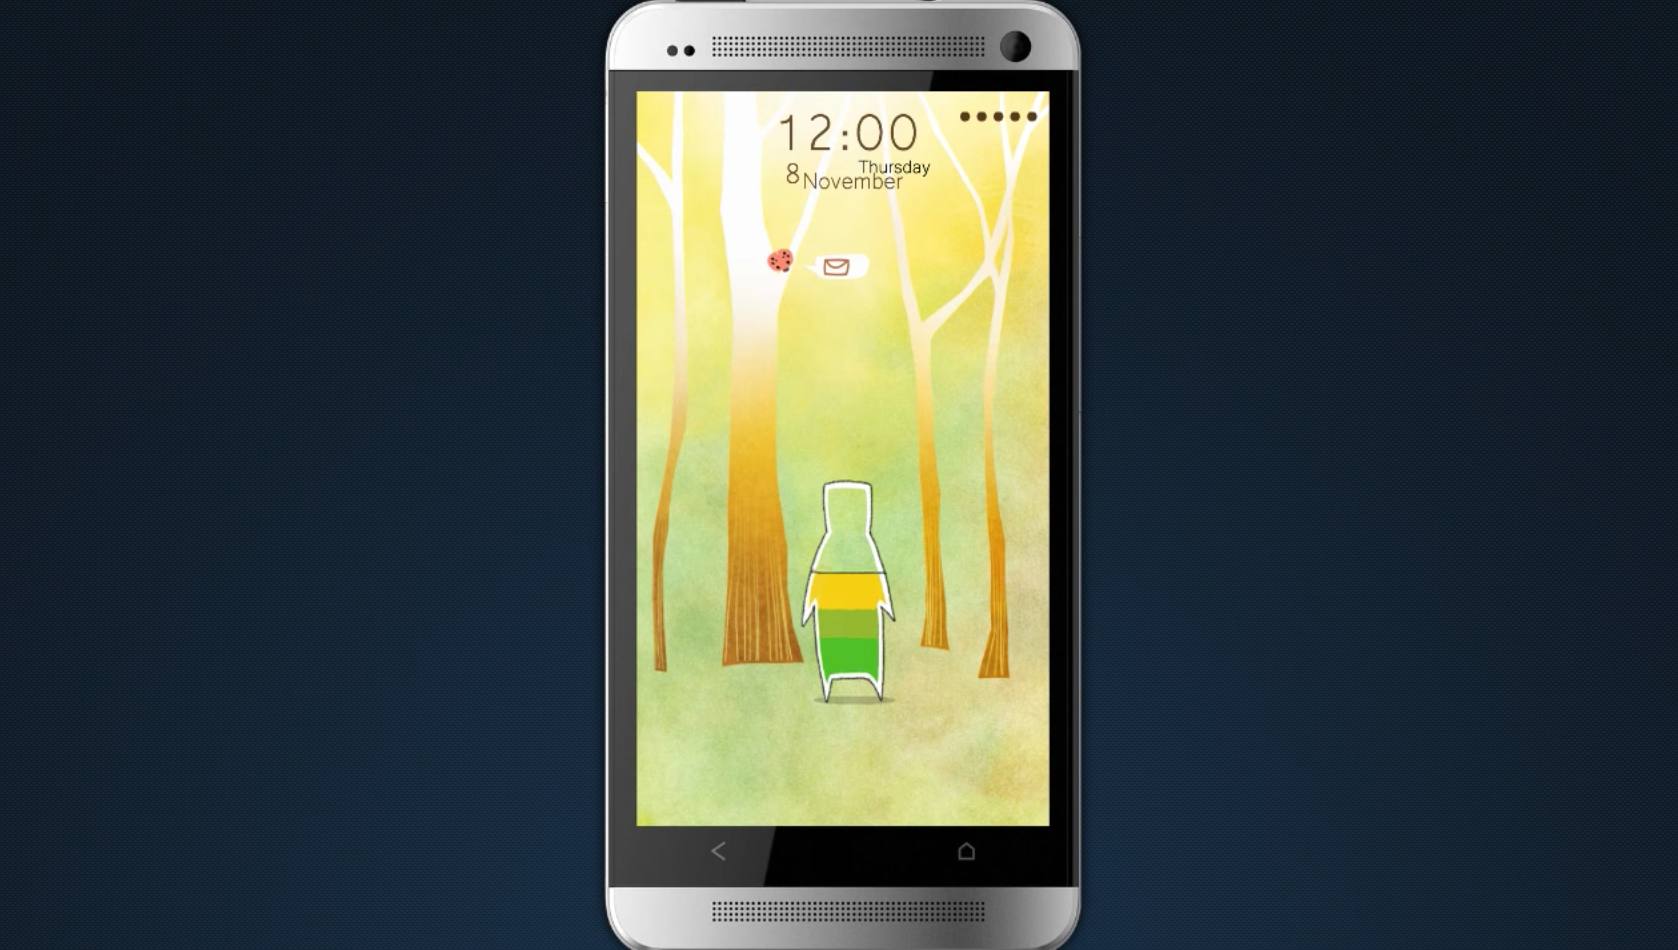 Android lockscreen